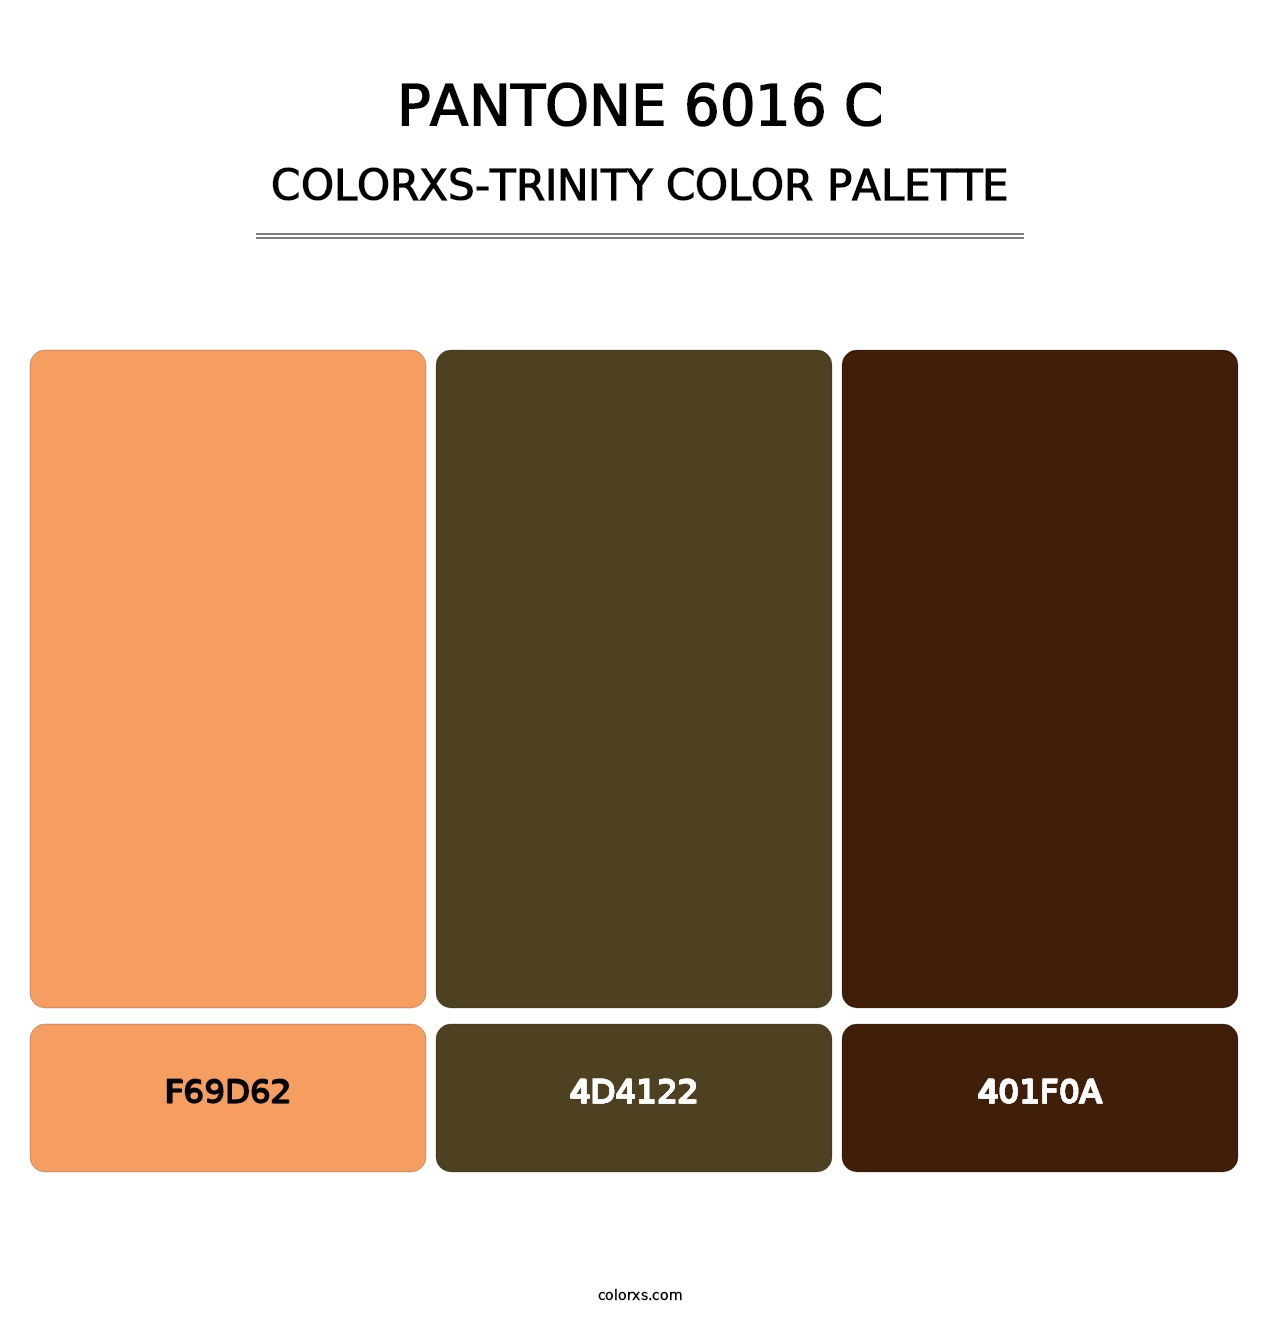 PANTONE 6016 C - Colorxs Trinity Palette